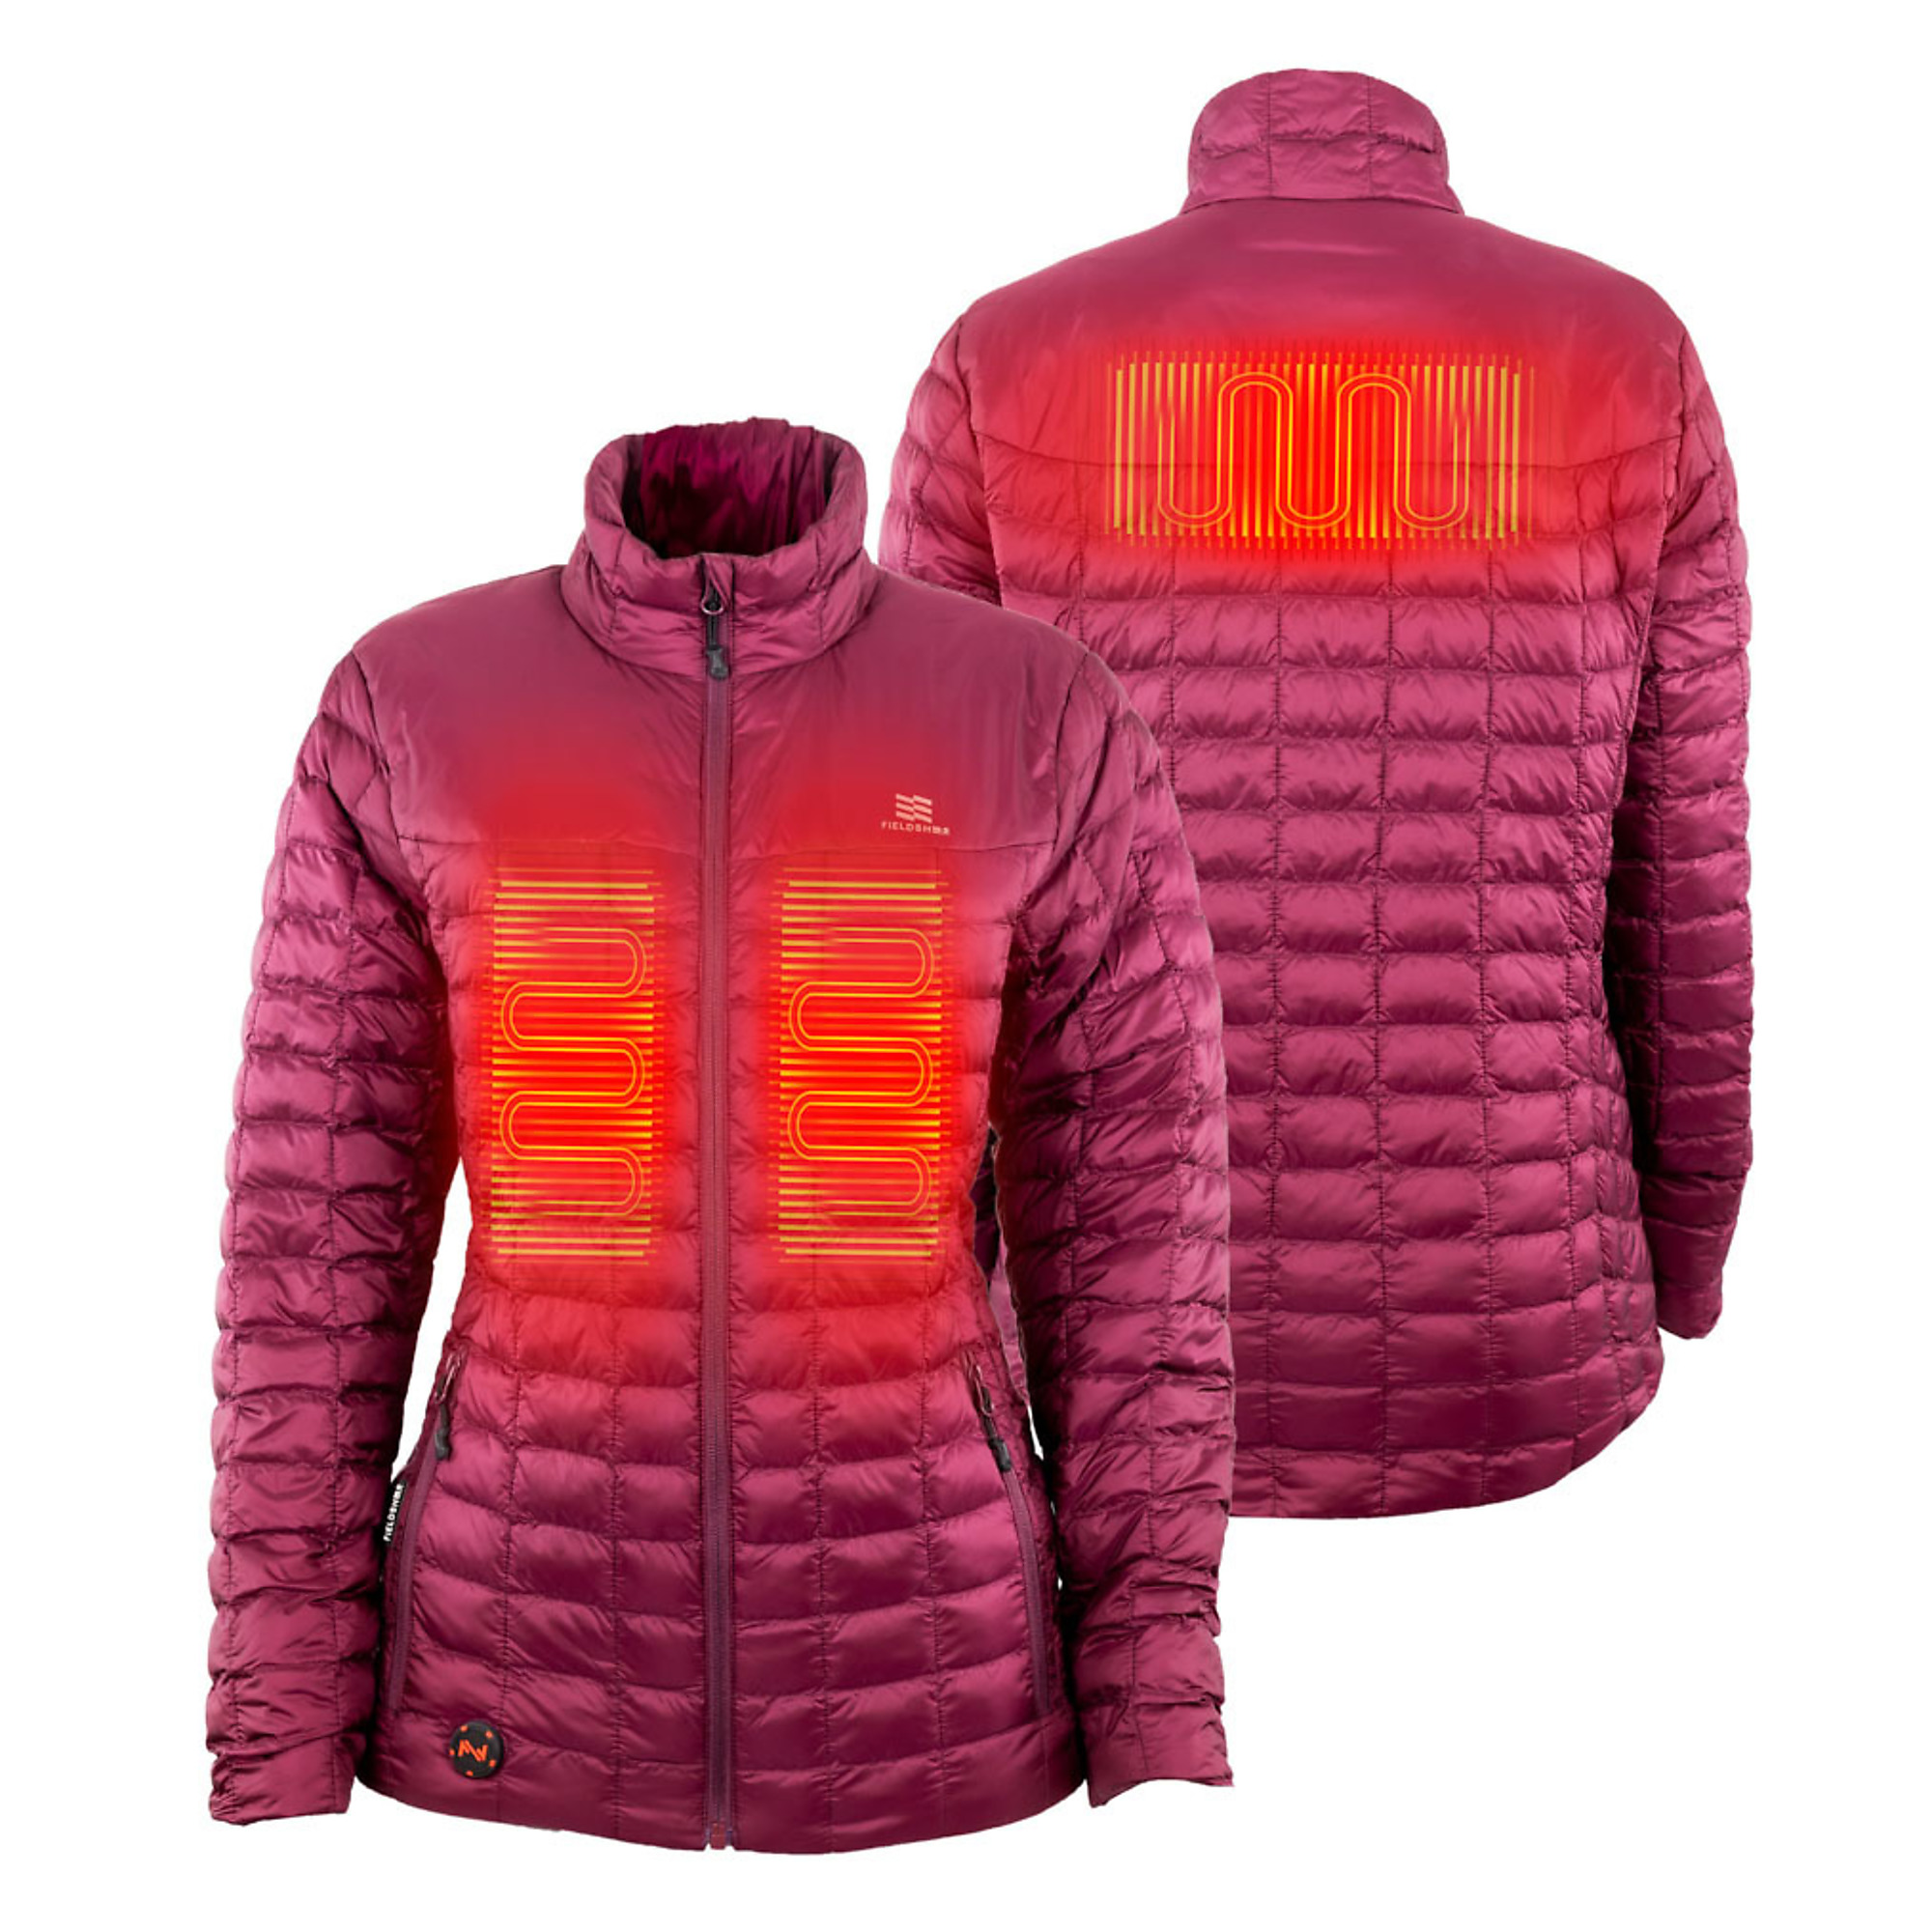 Fieldsheer, Women's 7.4v Backcountry Heated Jacket, Size XL, Color Red, Model MWWJ04310520